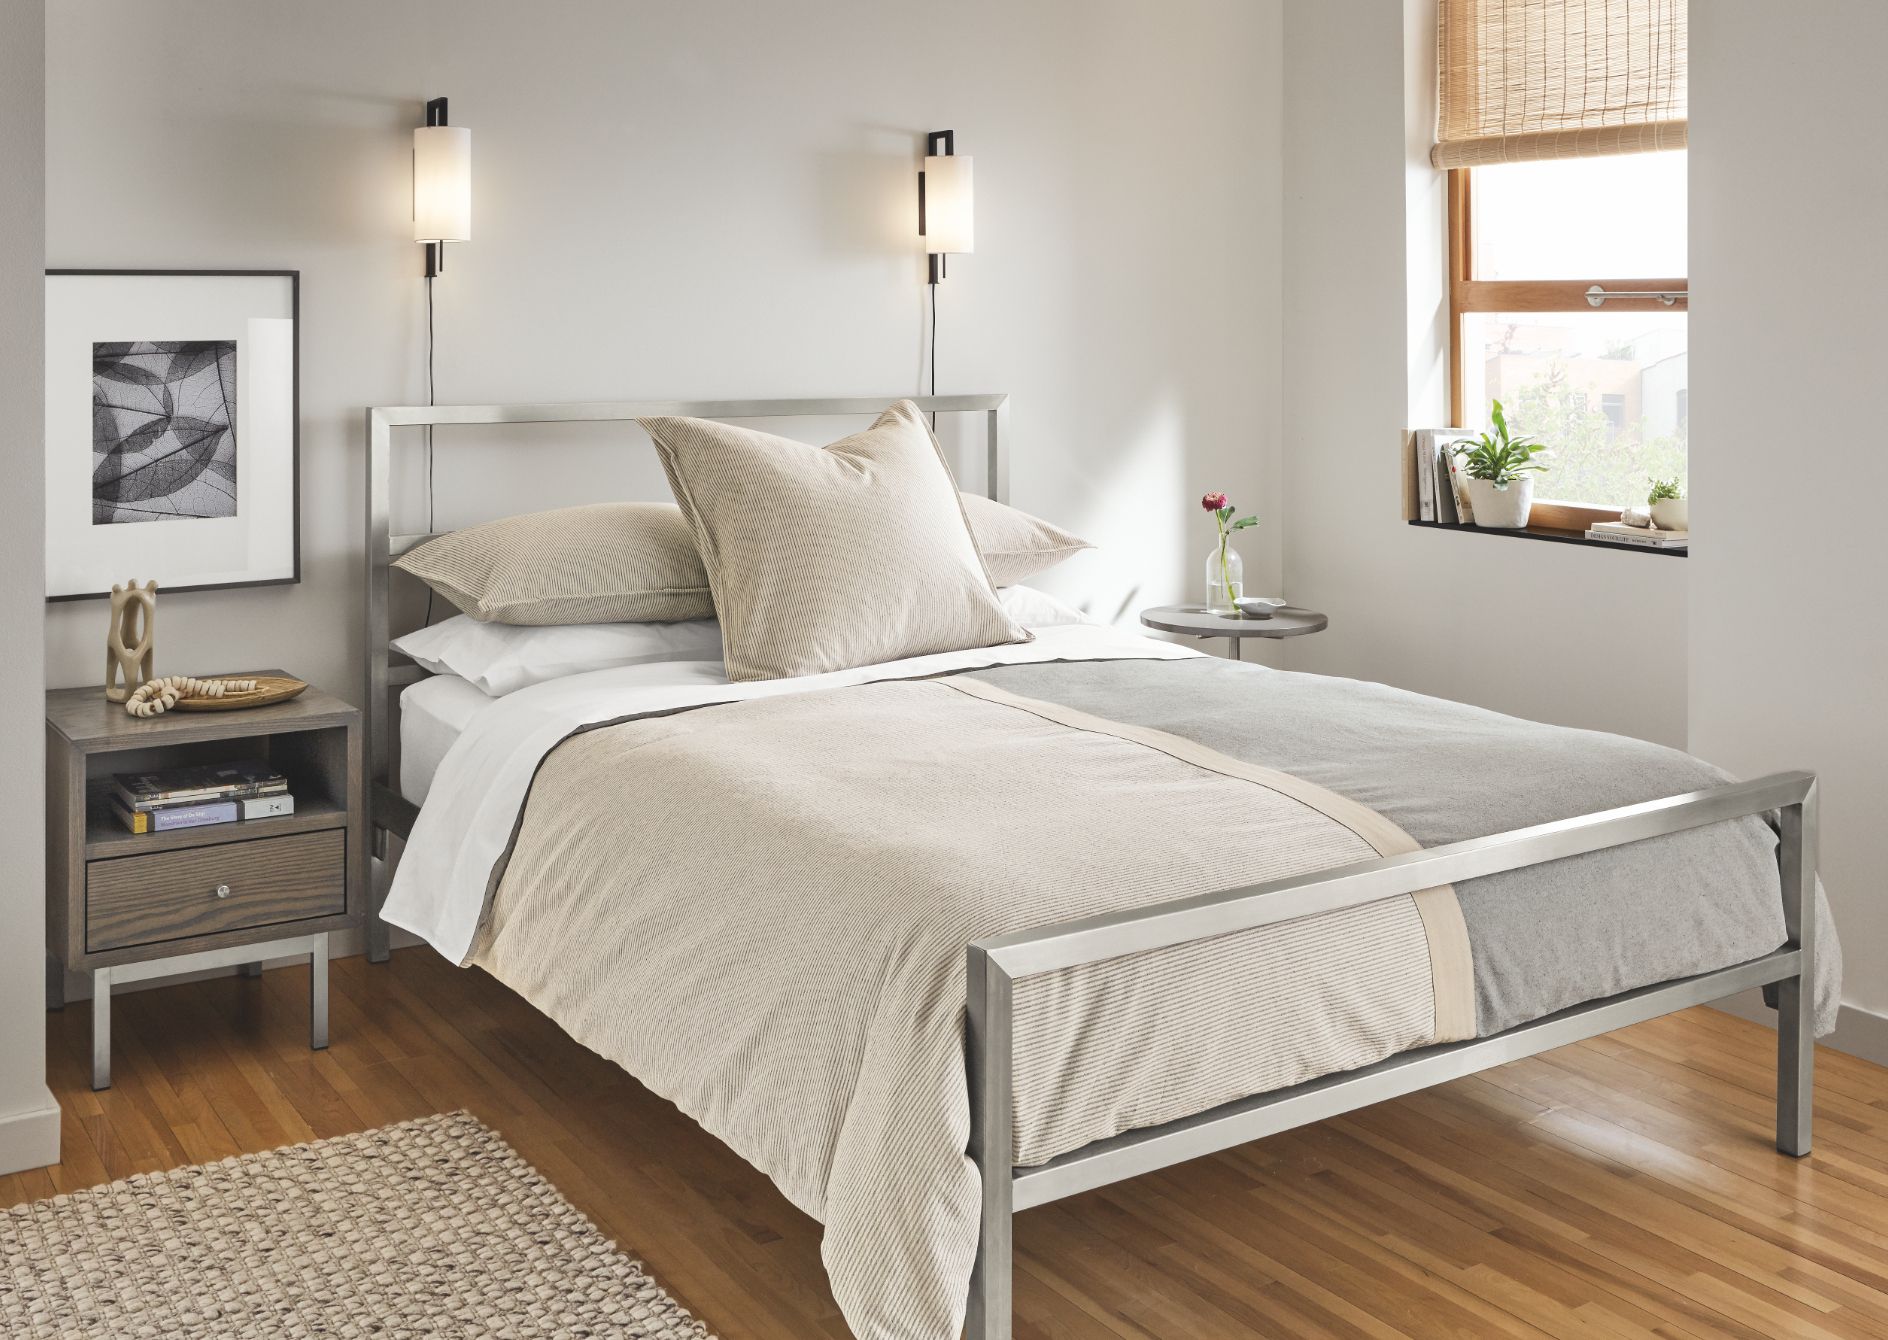 Minimalist Full Bedroom Ideas for Large Space